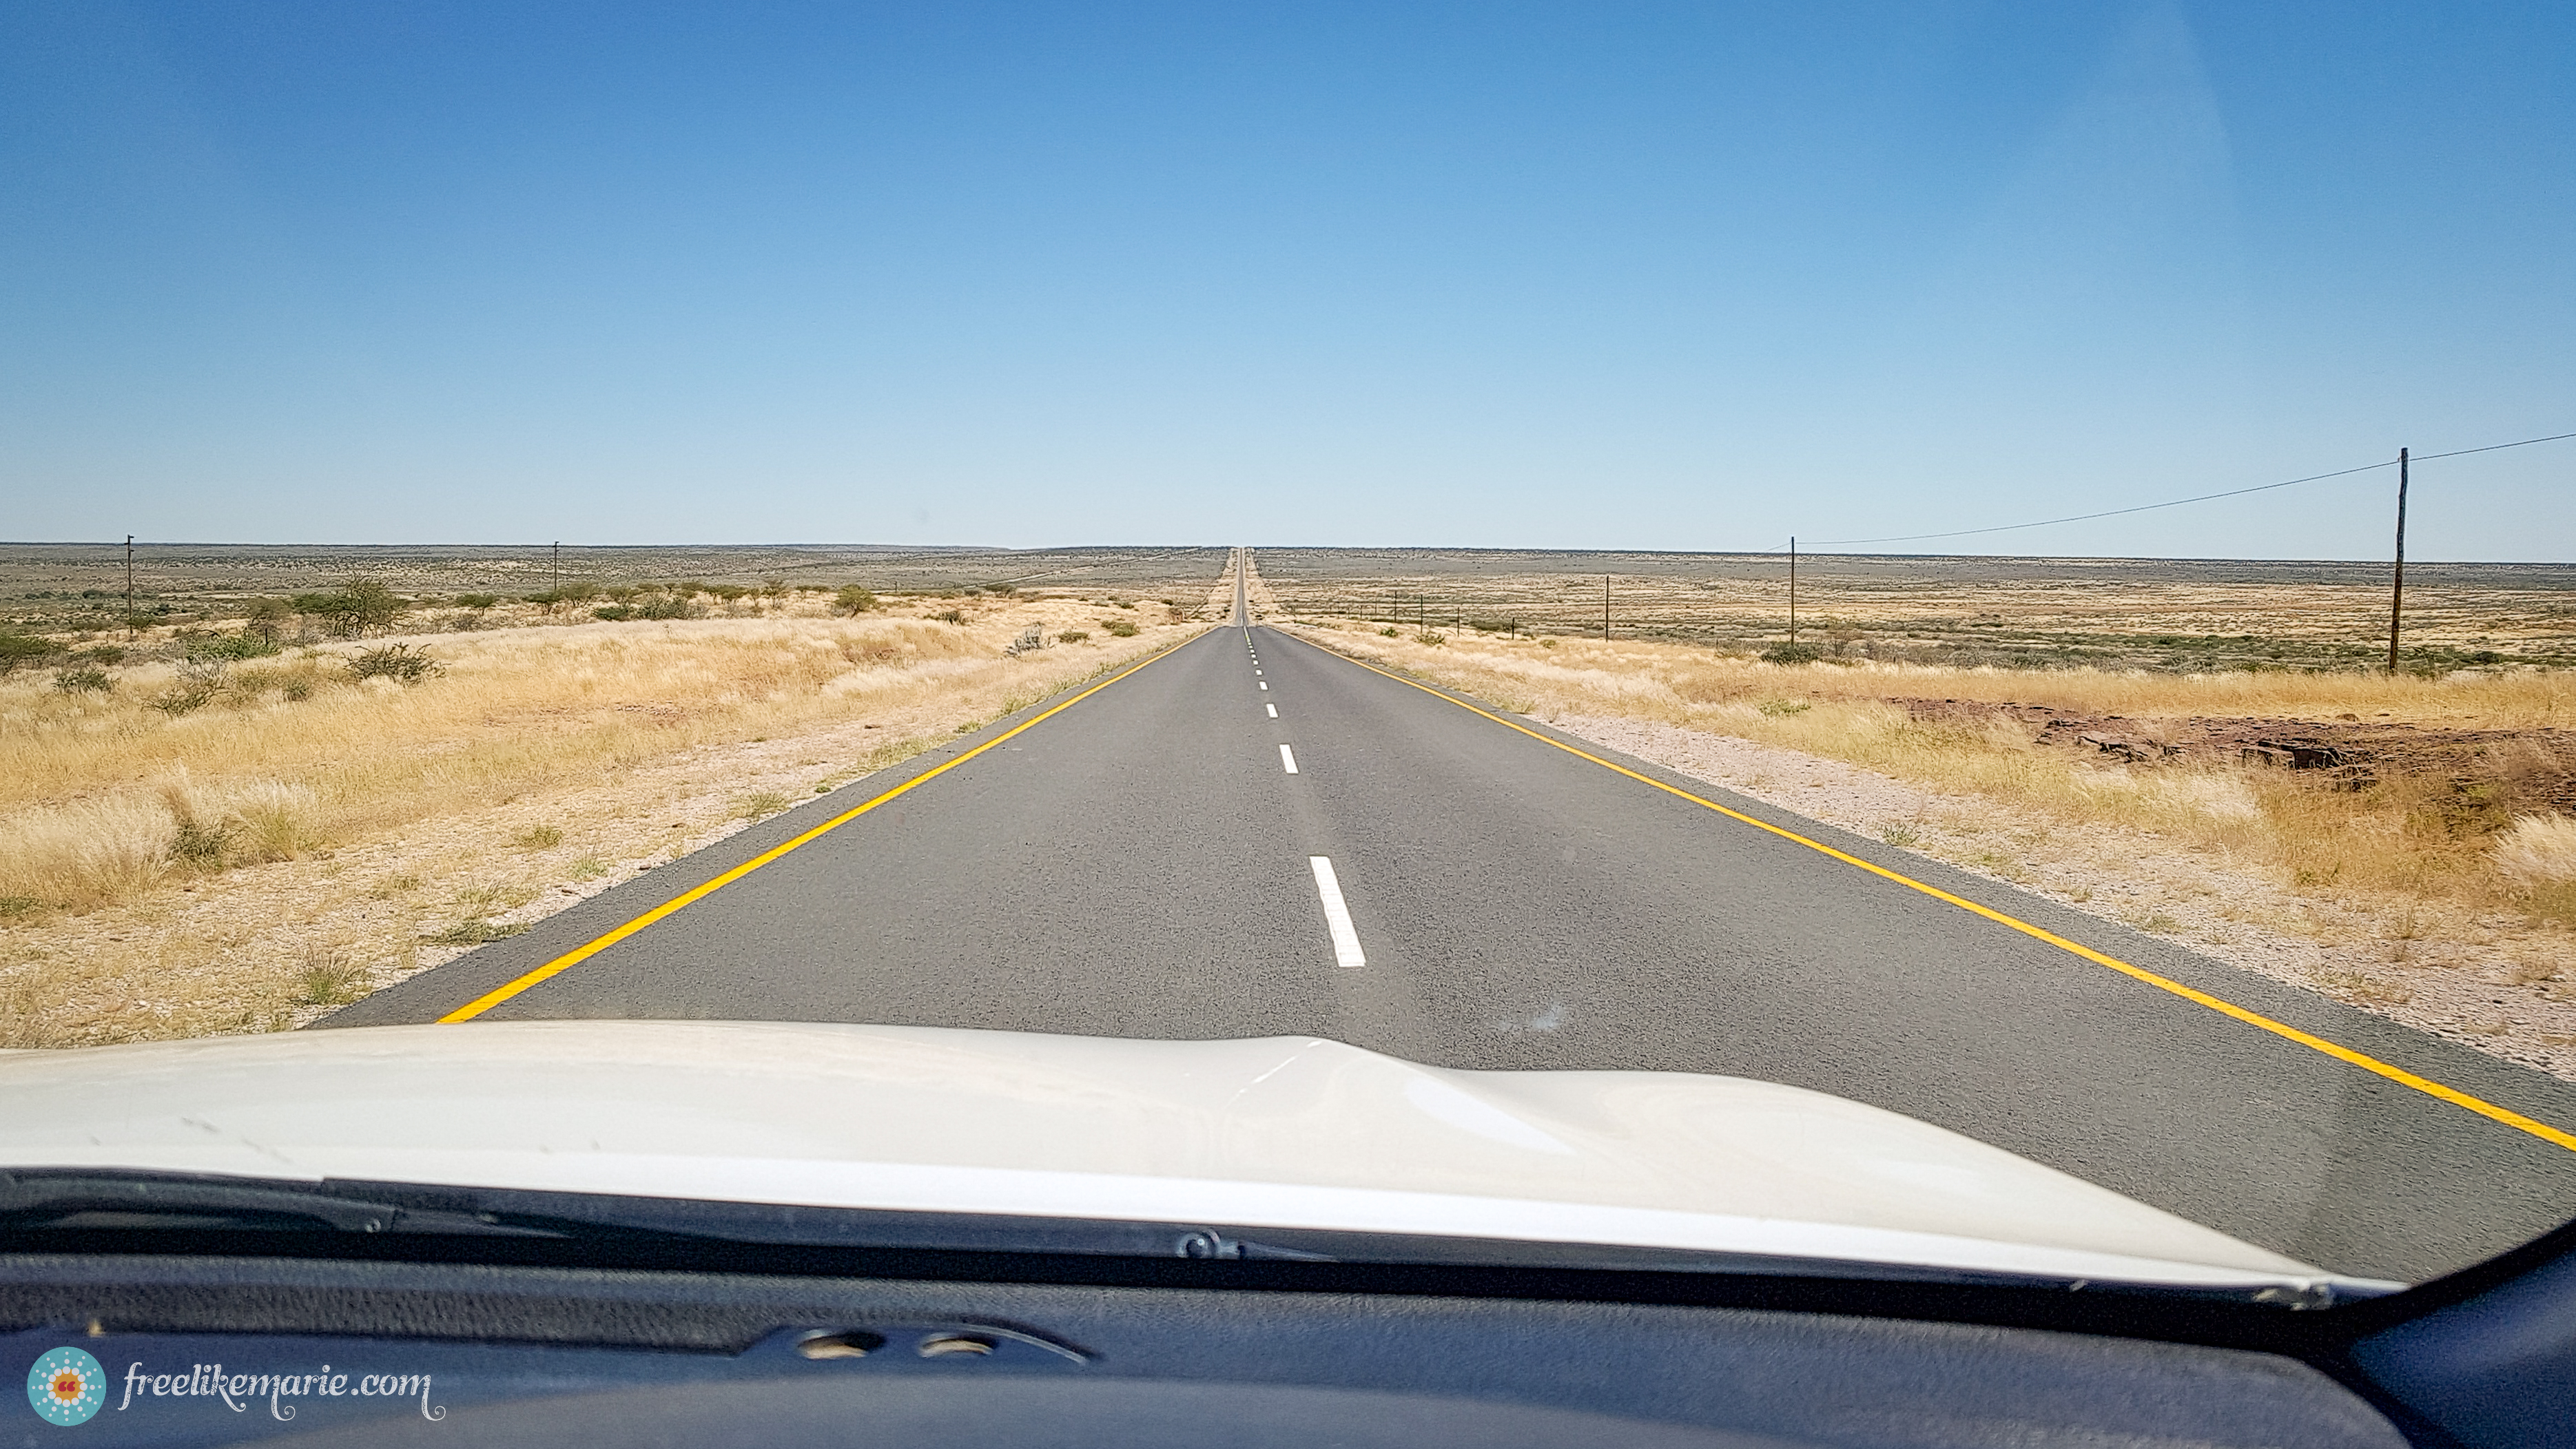 Those Empty Namibian Roads